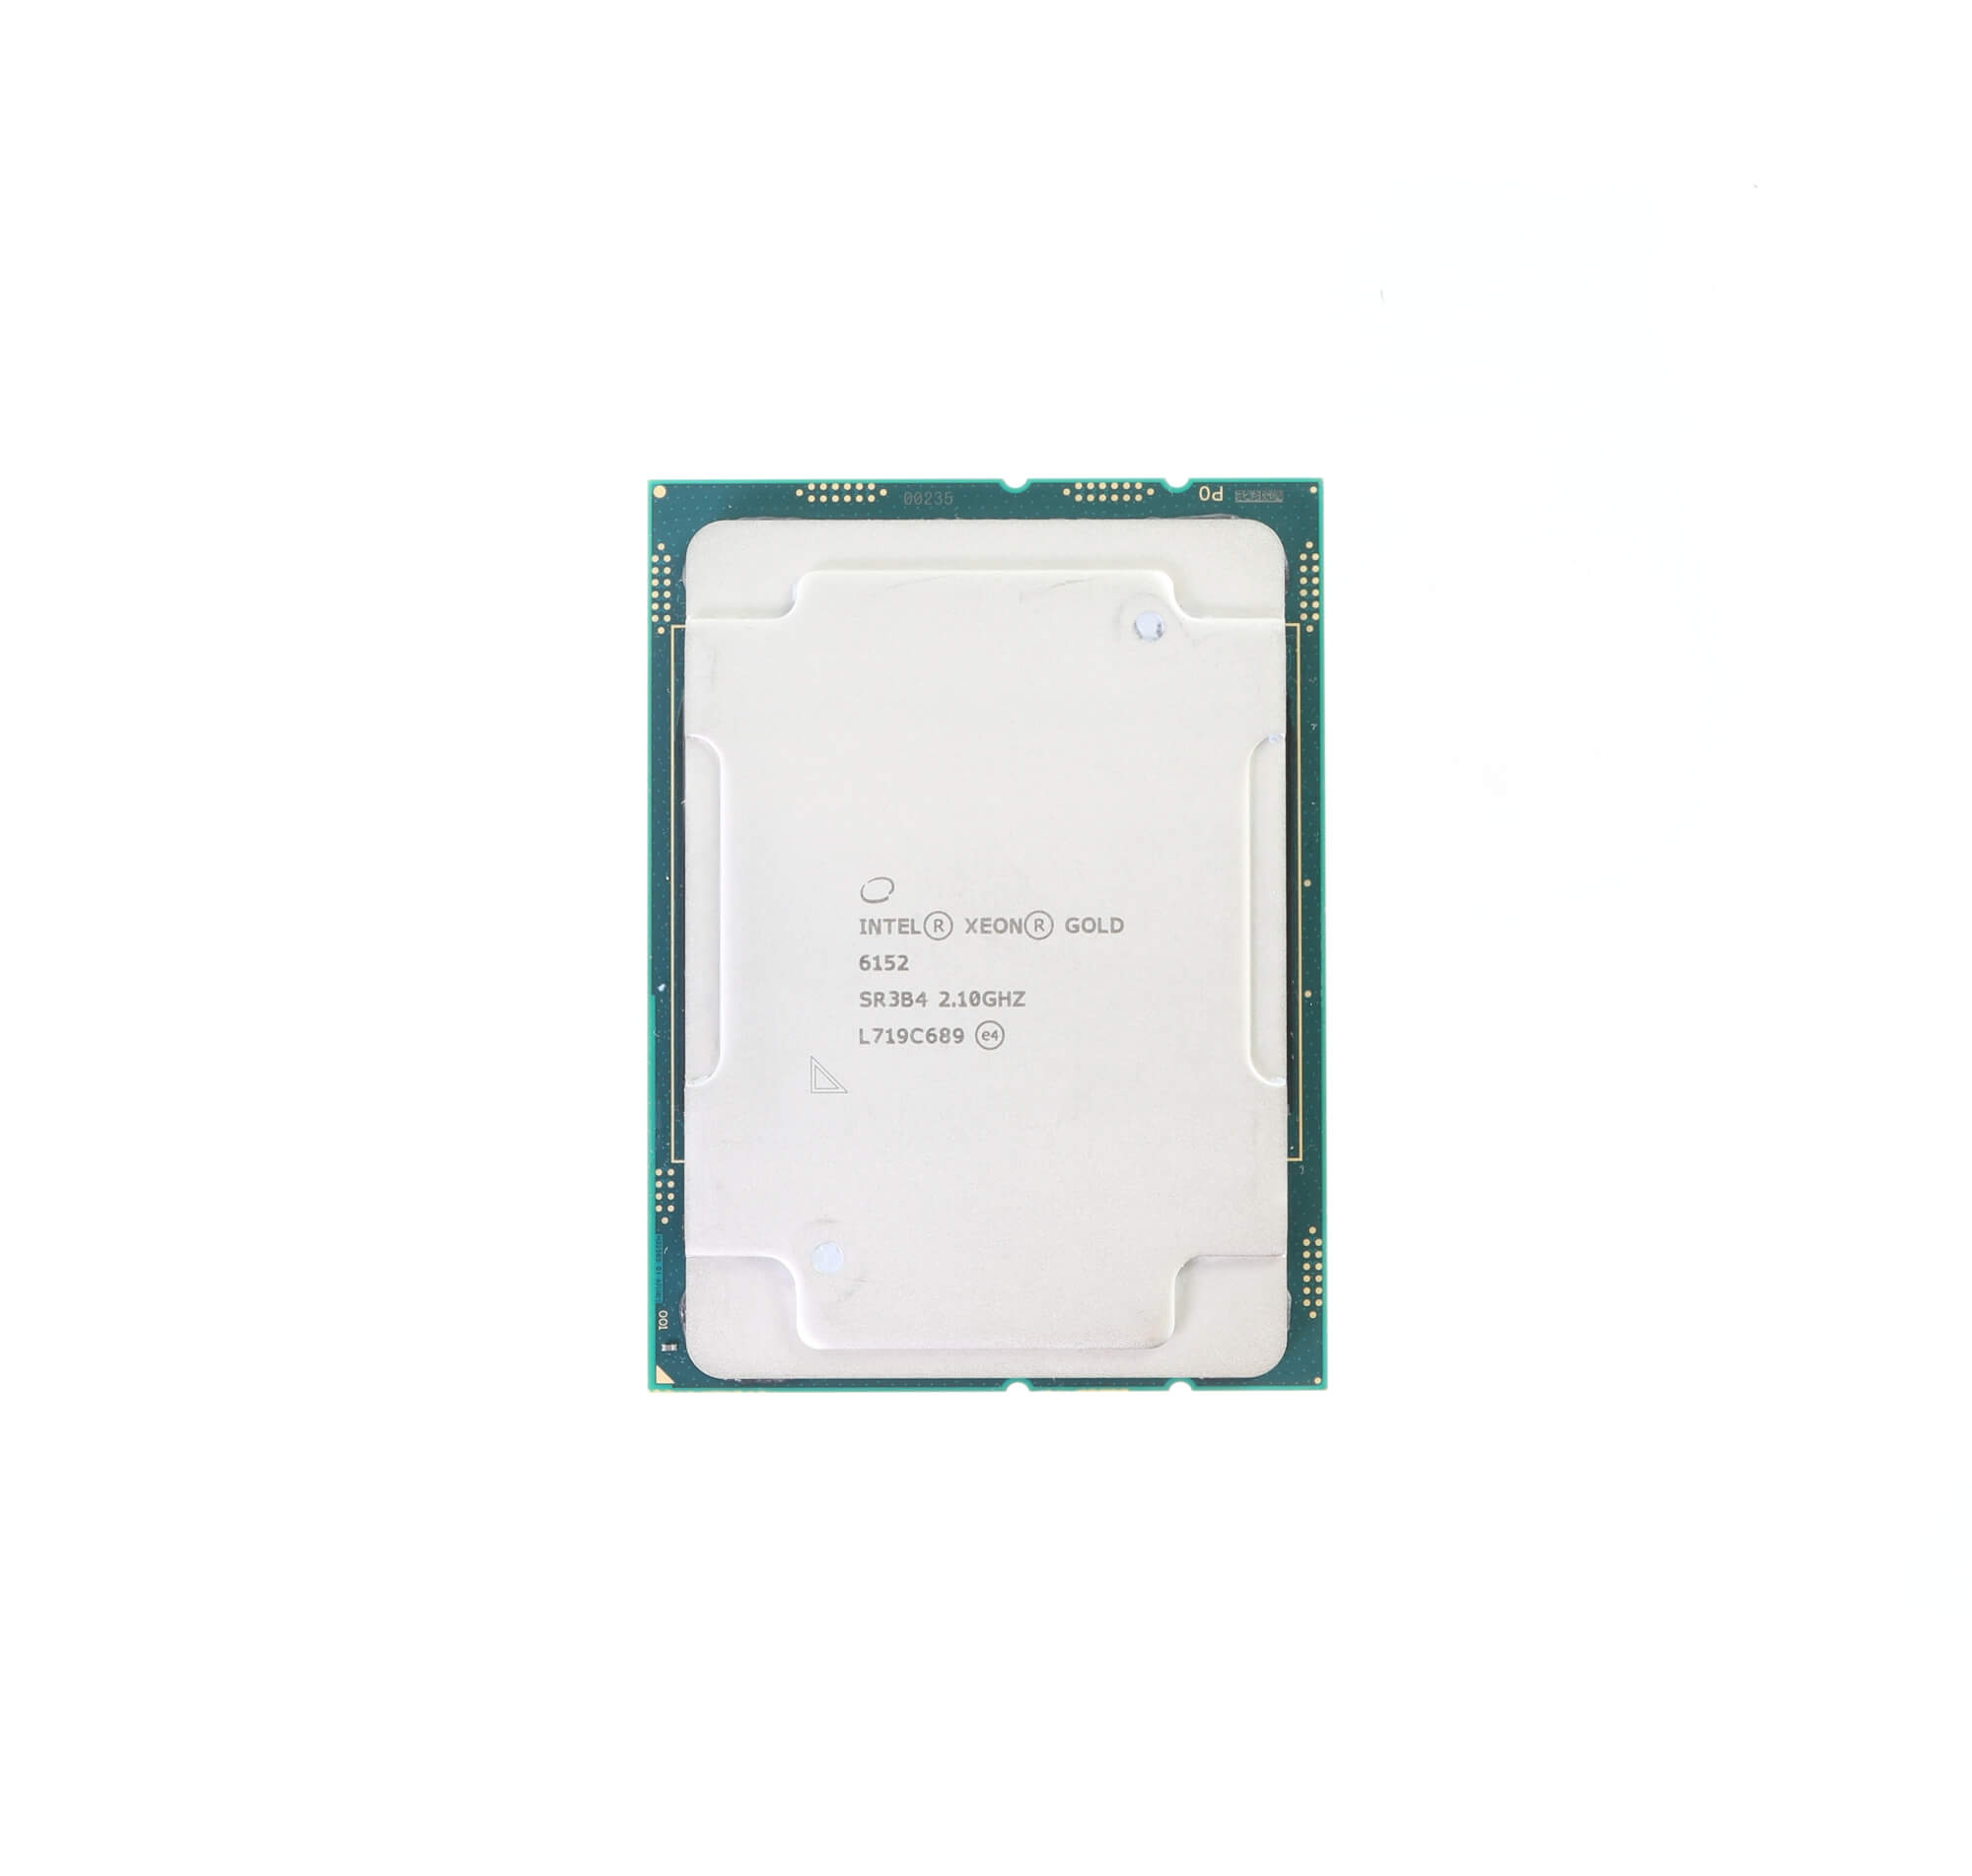 Intel Xeon Gold 6152 CPU Processor 22 Core 2.10GHz - SR3B4